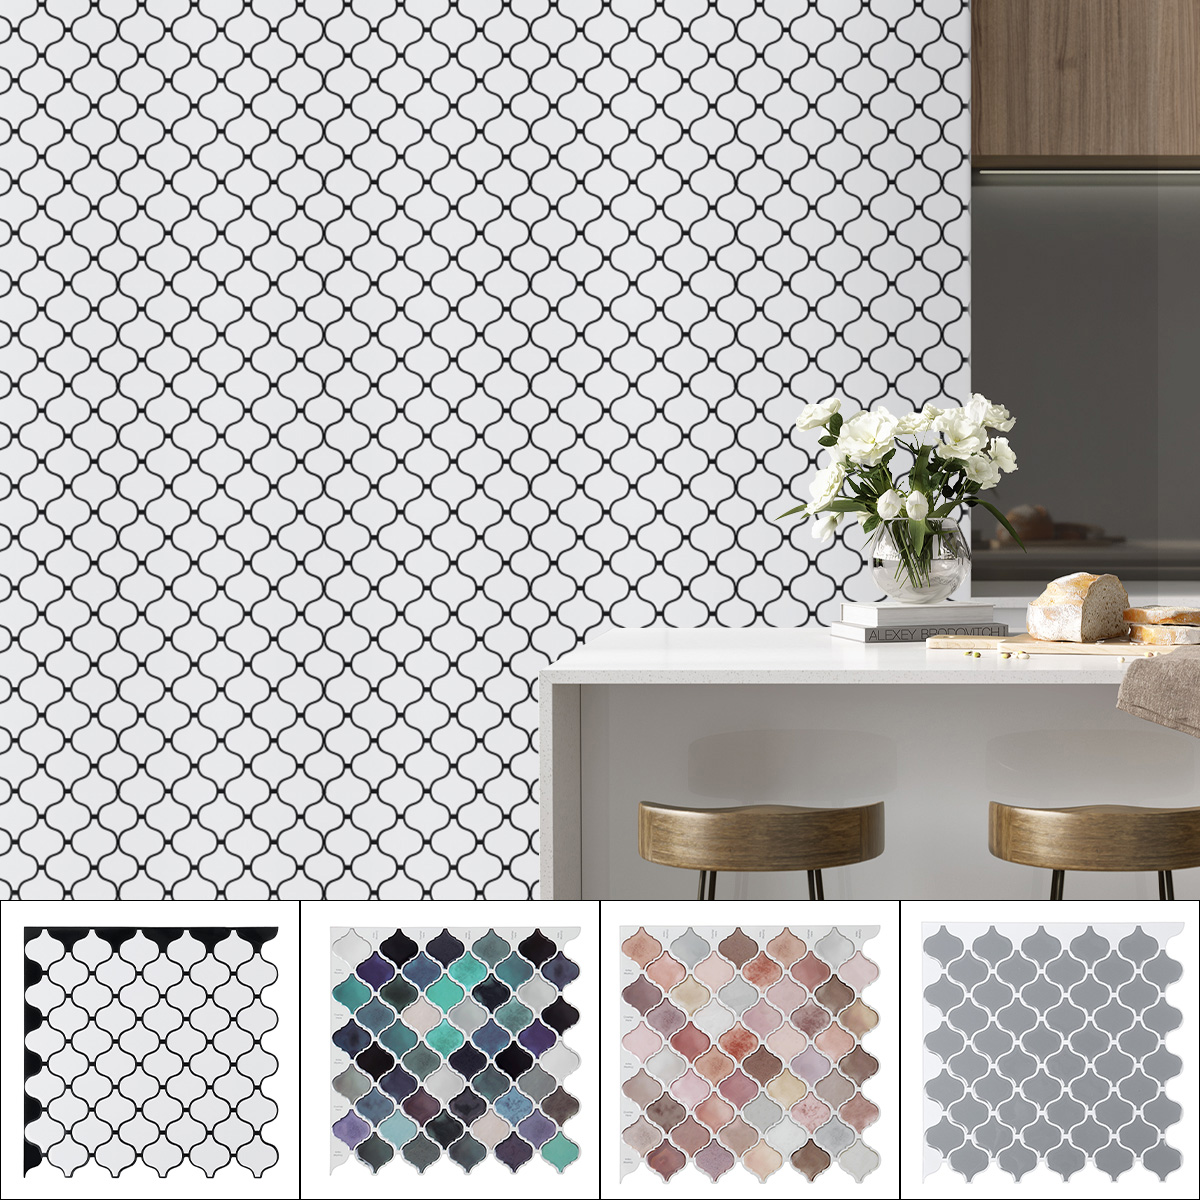 DIY-3D-Self-Adhesive-Wall-Tile-Sticker-Vinyl-Home-Kitchen-Bathroom-Decal-Decoration-1823170-2